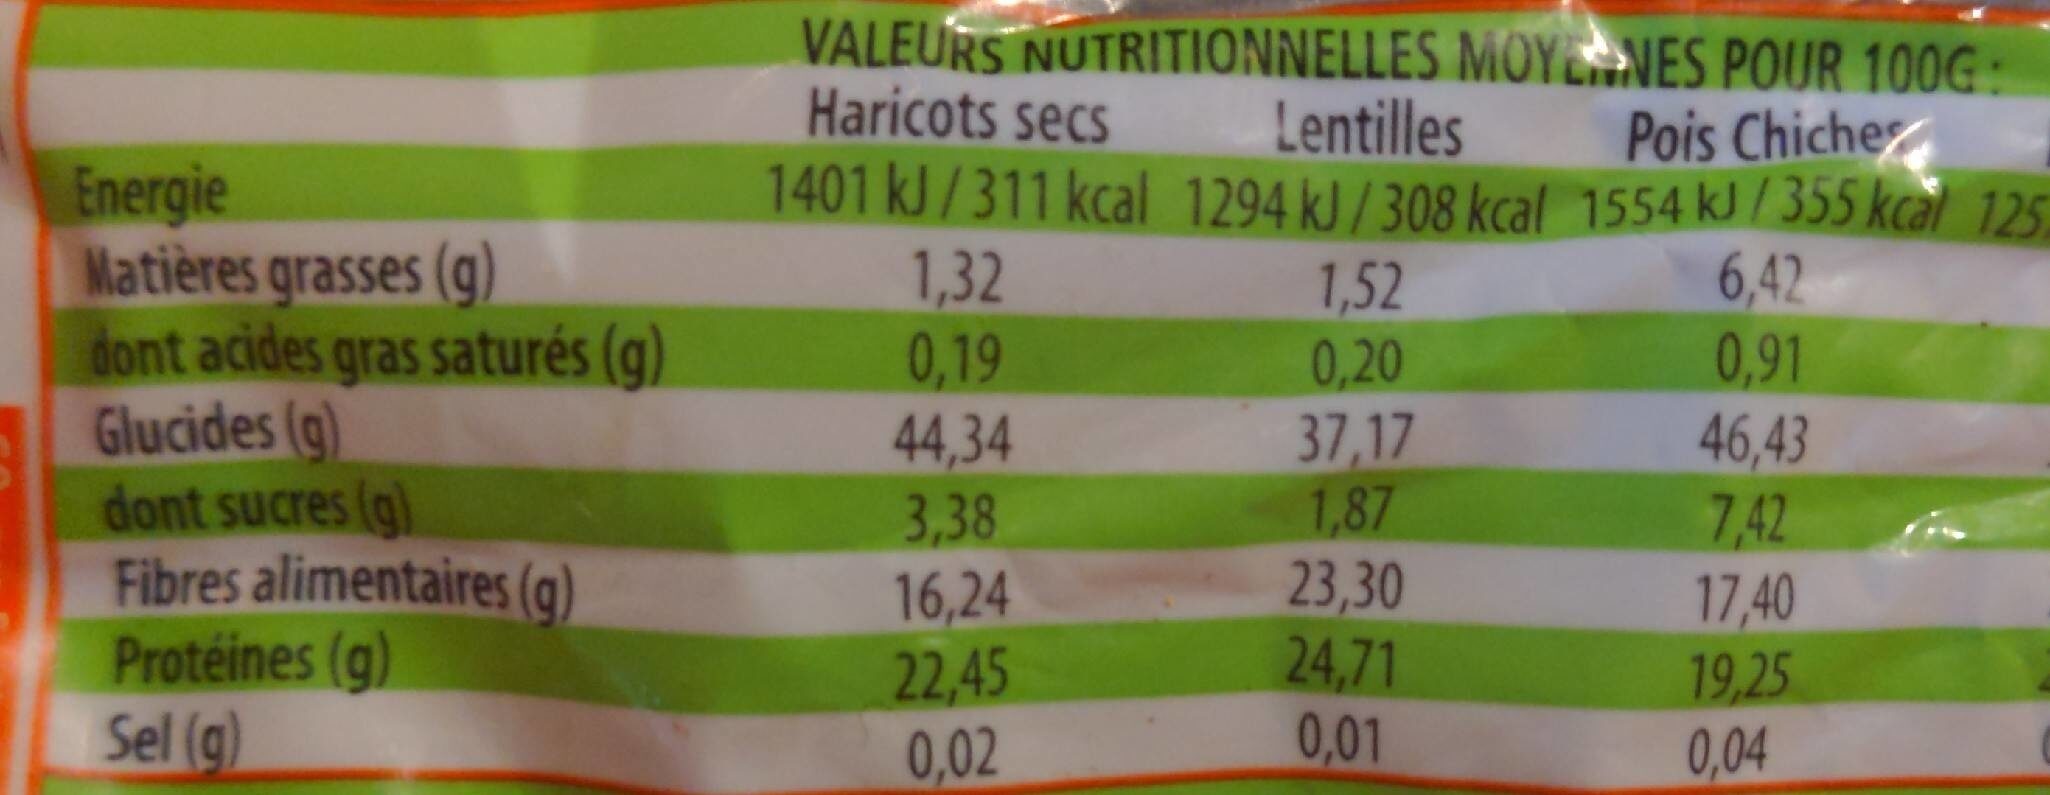 Lentilles blondes 4mm - Nutrition facts - fr